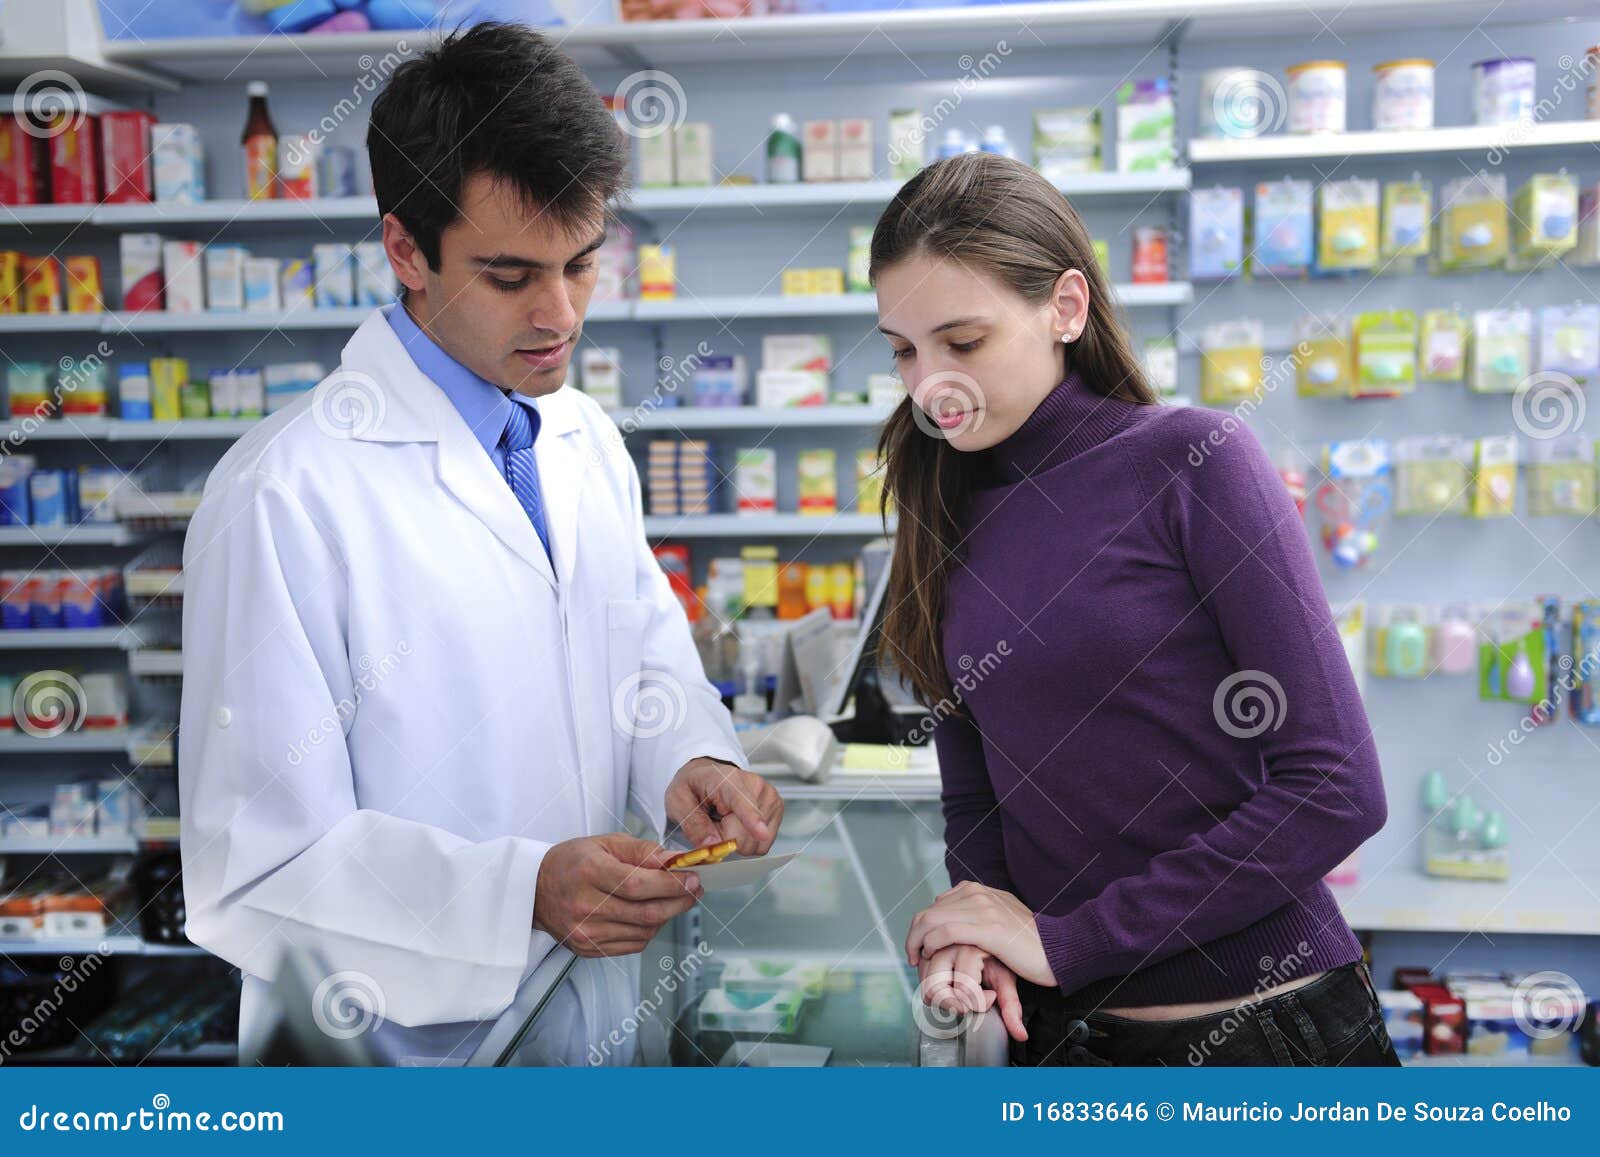 pharmacist advising client at pharmacy